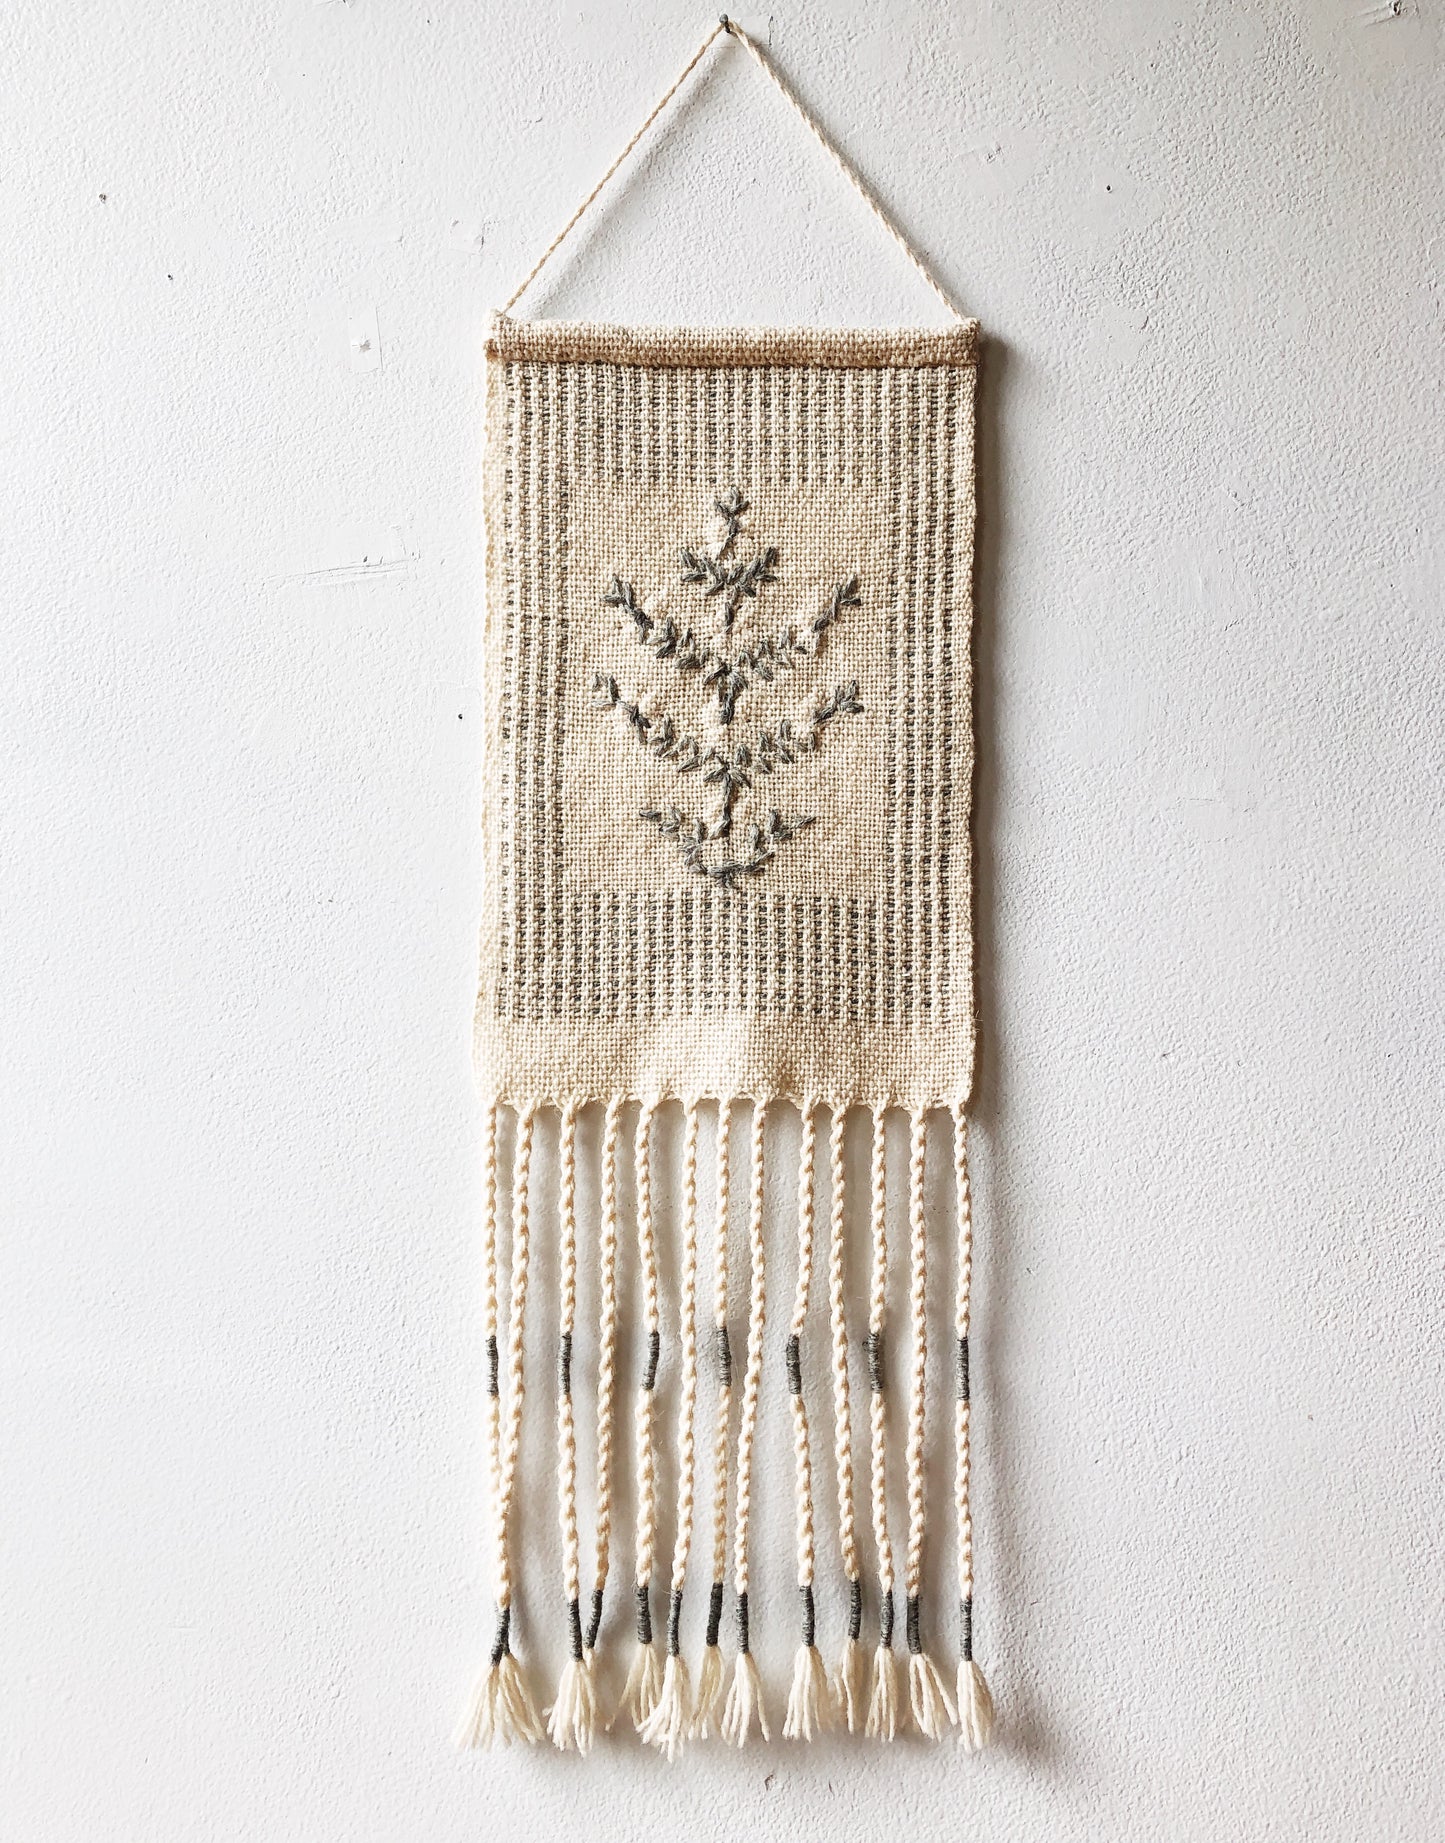 Vintage Wool Embroidered Weaving